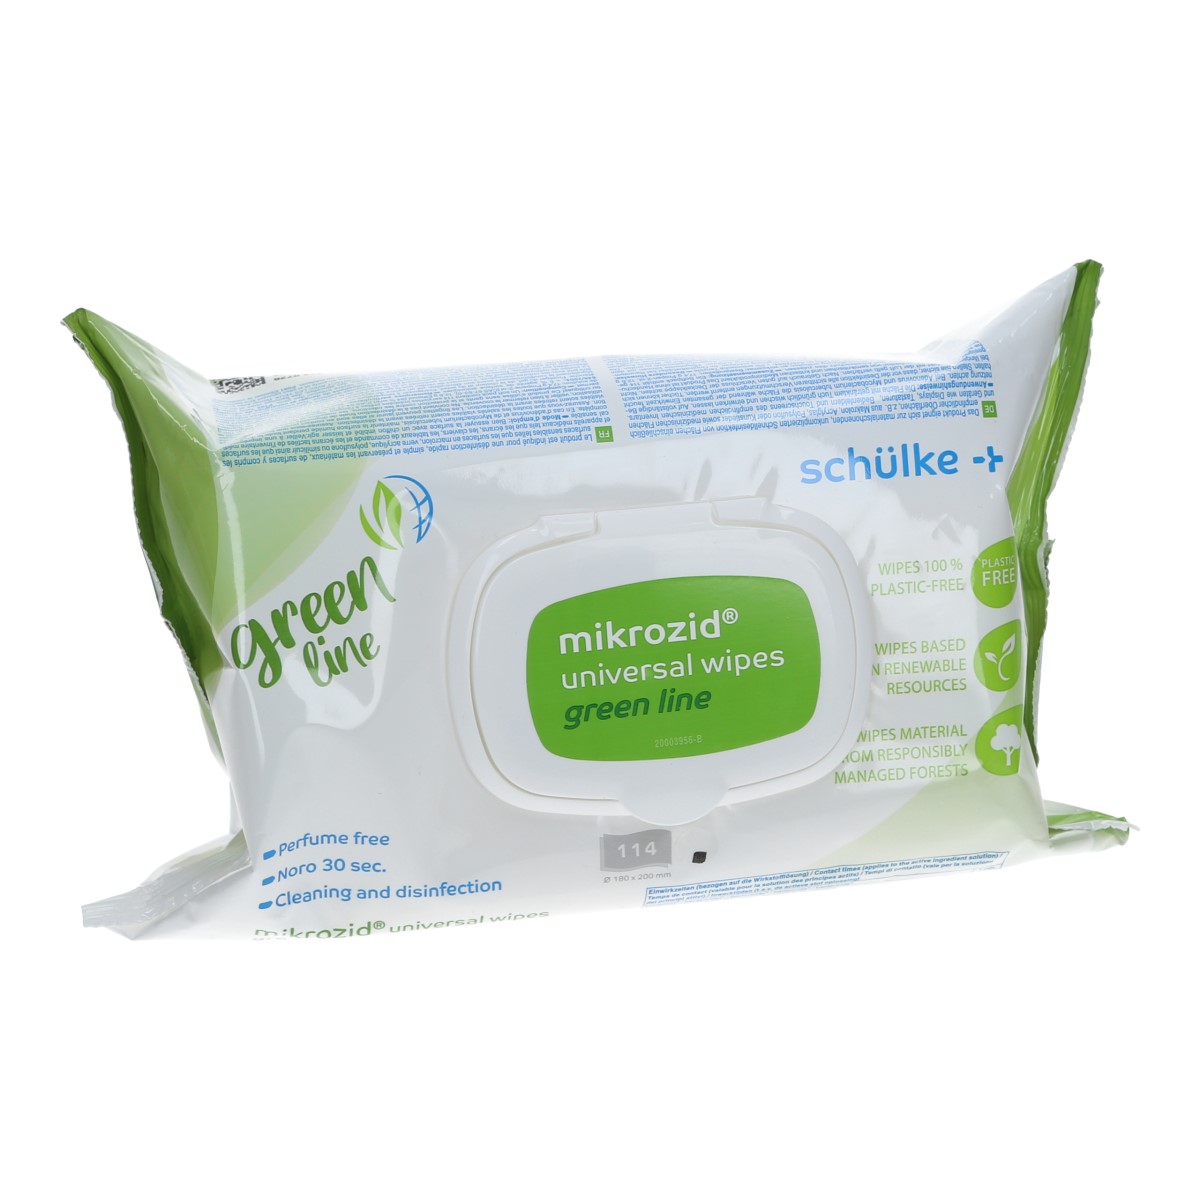 Schülke Desinfektionstücher Mikrozid universal wipes premium green line Flächendesinfektion 